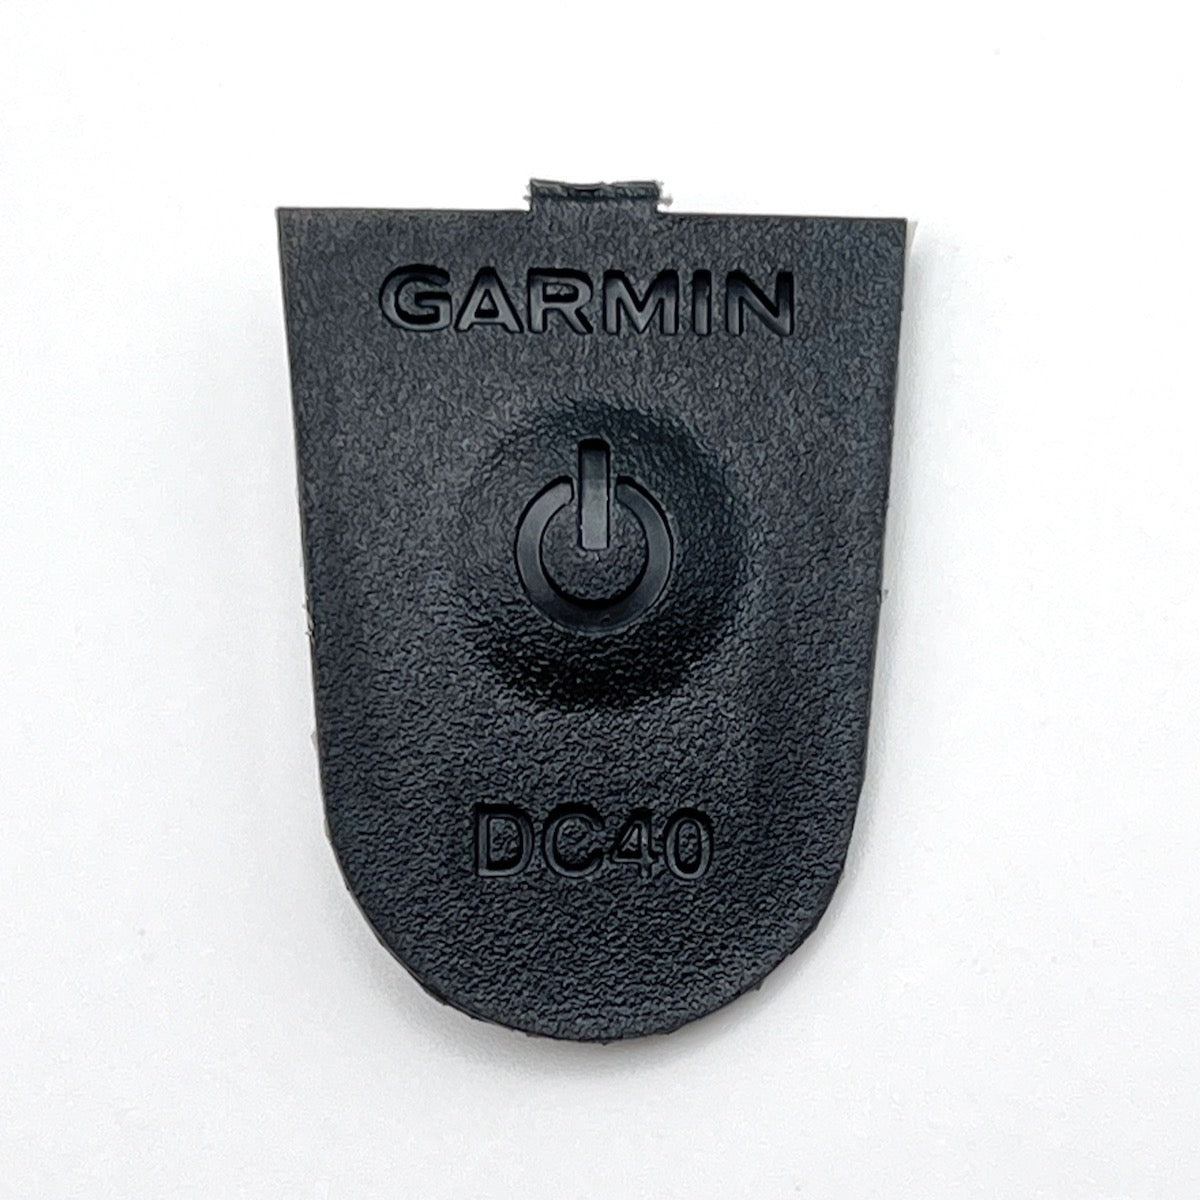 New Rubber power button for collar Garmin DC 40 repacement part repair case